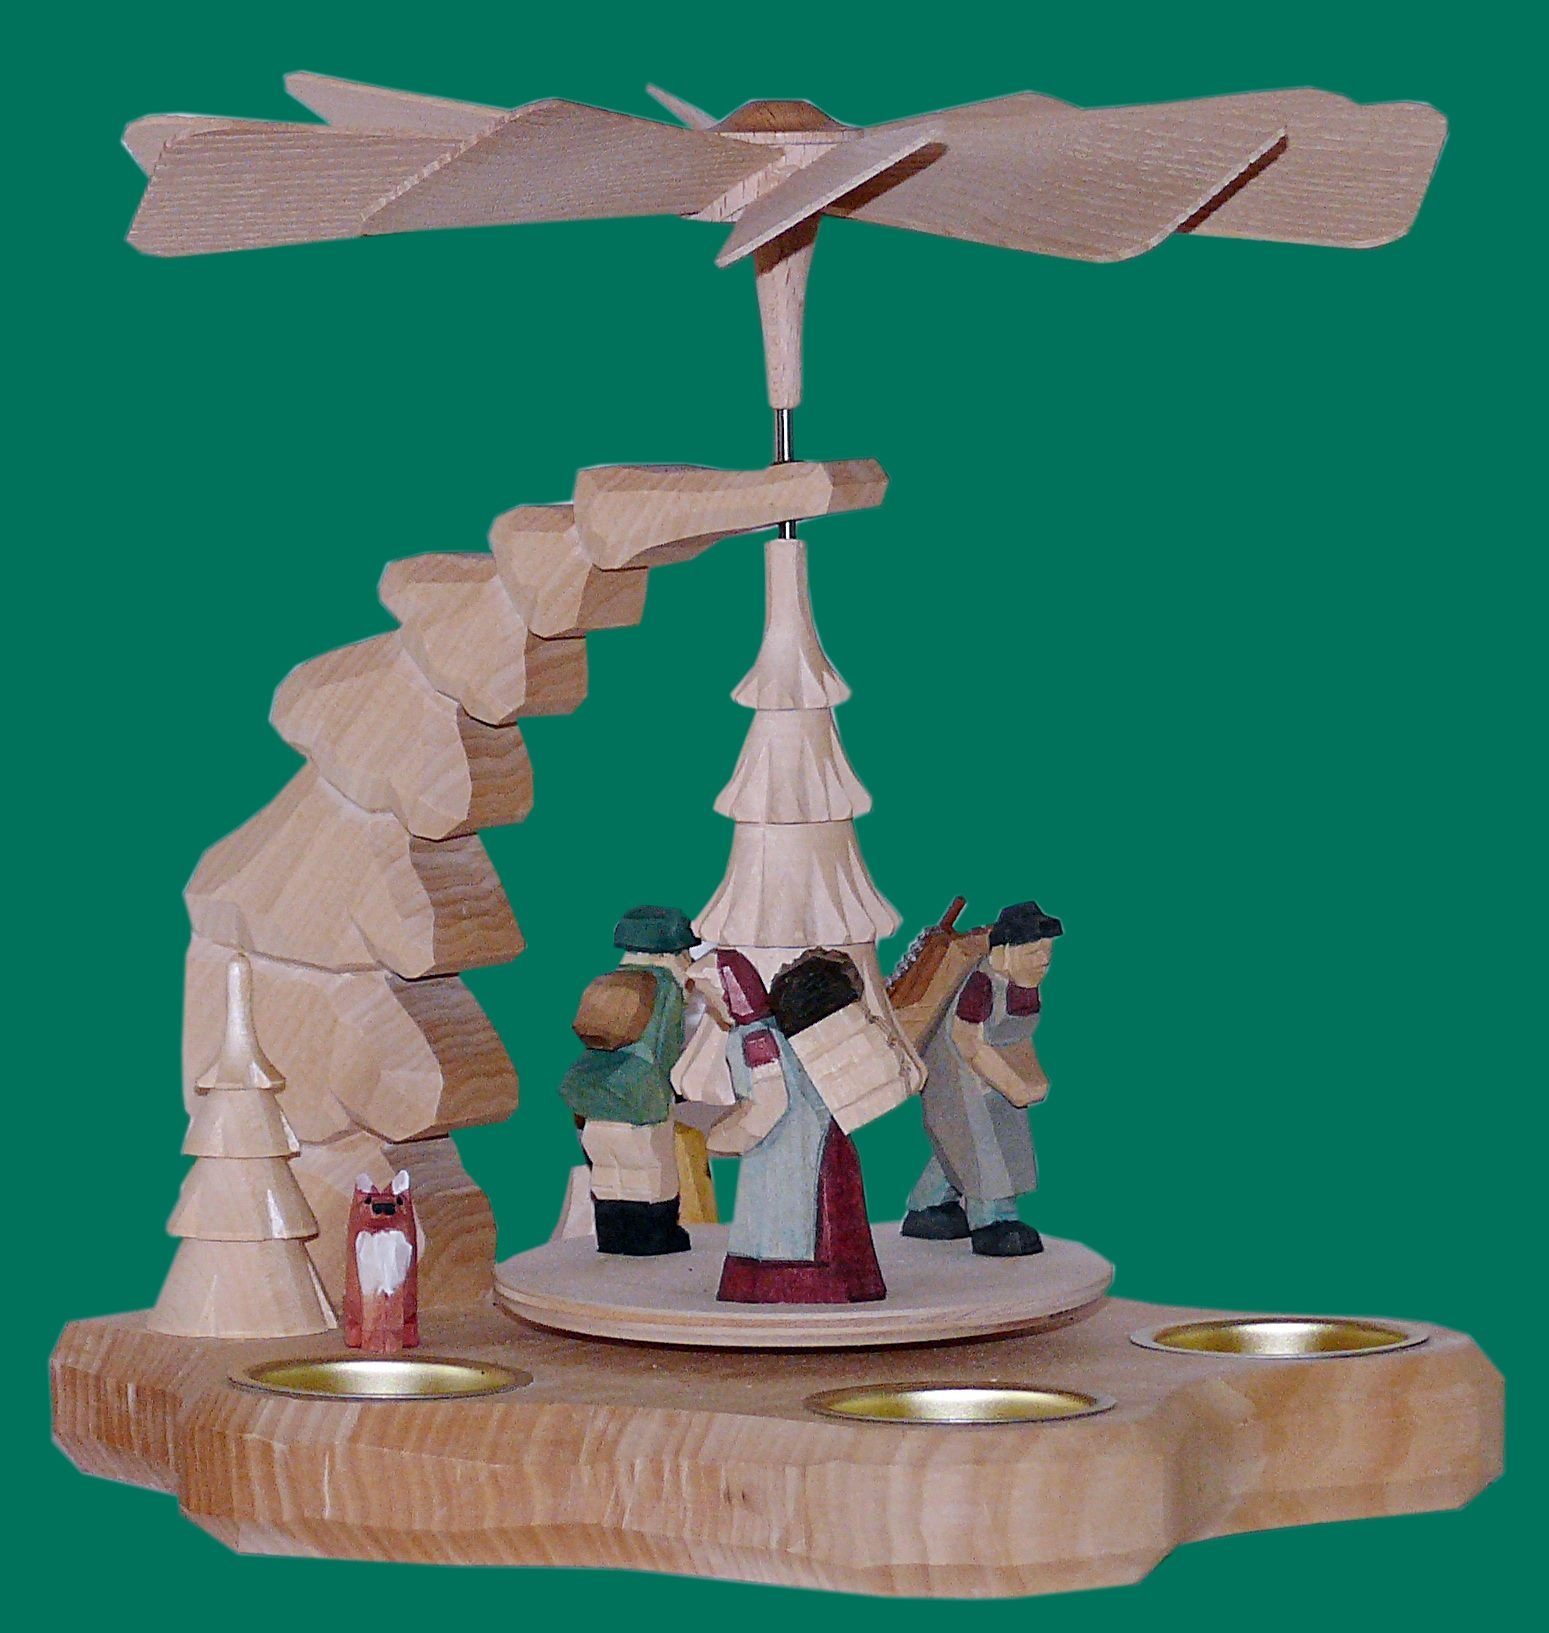 Weihnachtspyramide Wandpyramide mit Erzgebirgsfiguren bunt